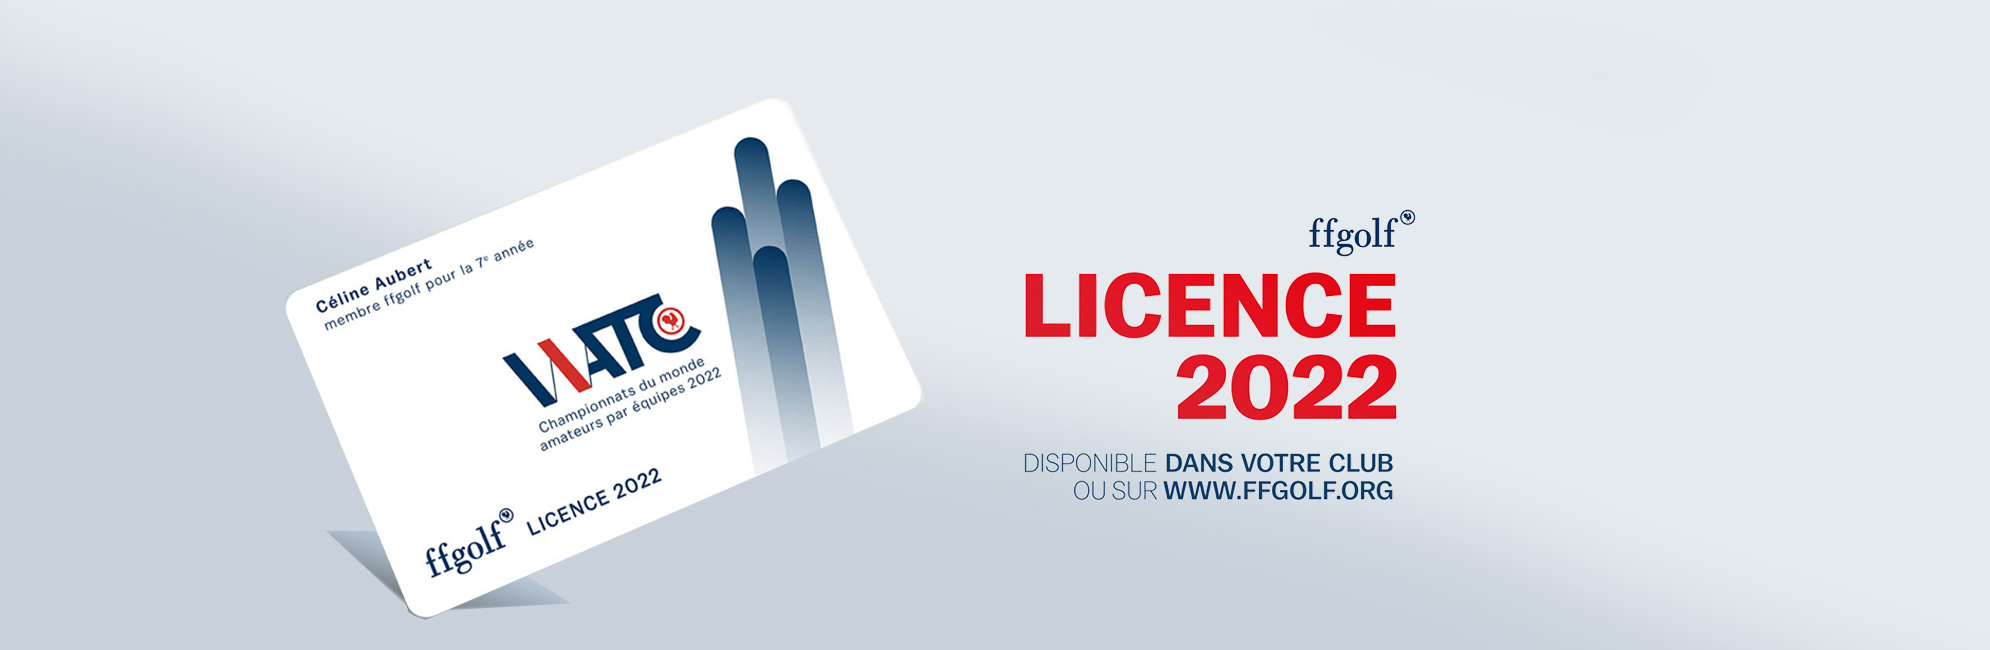 Licence 2022